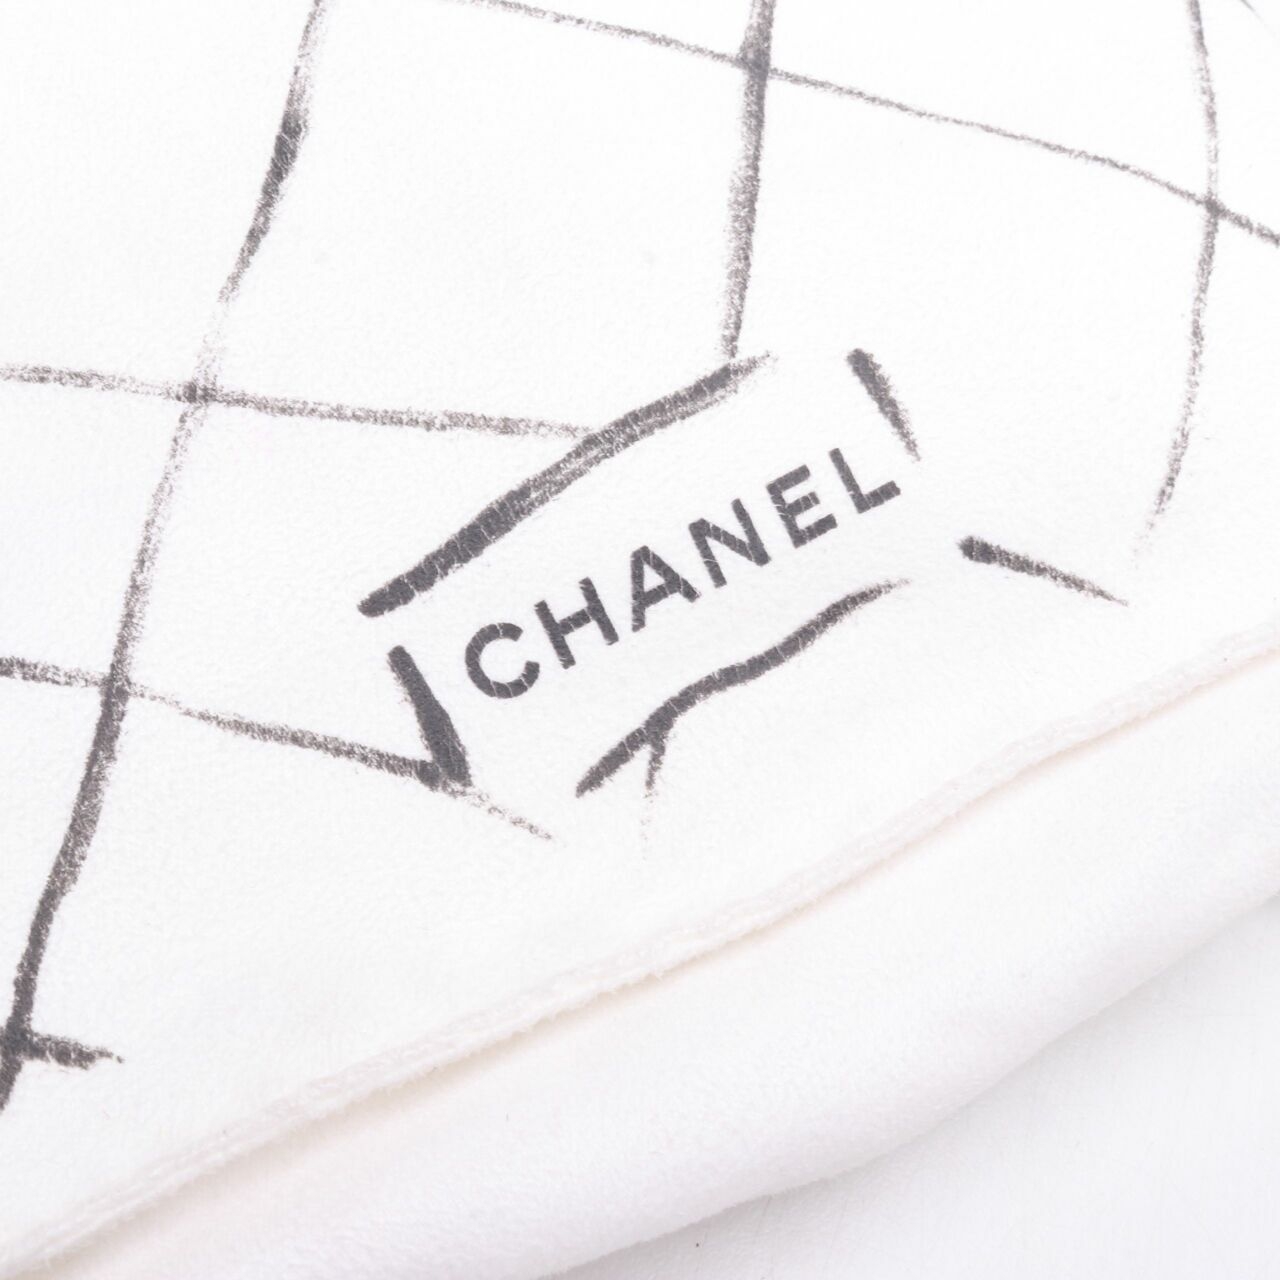 Chanel Tan Calfskin East West Bijoux Chain Flap Bag #12 Shoulder Bag